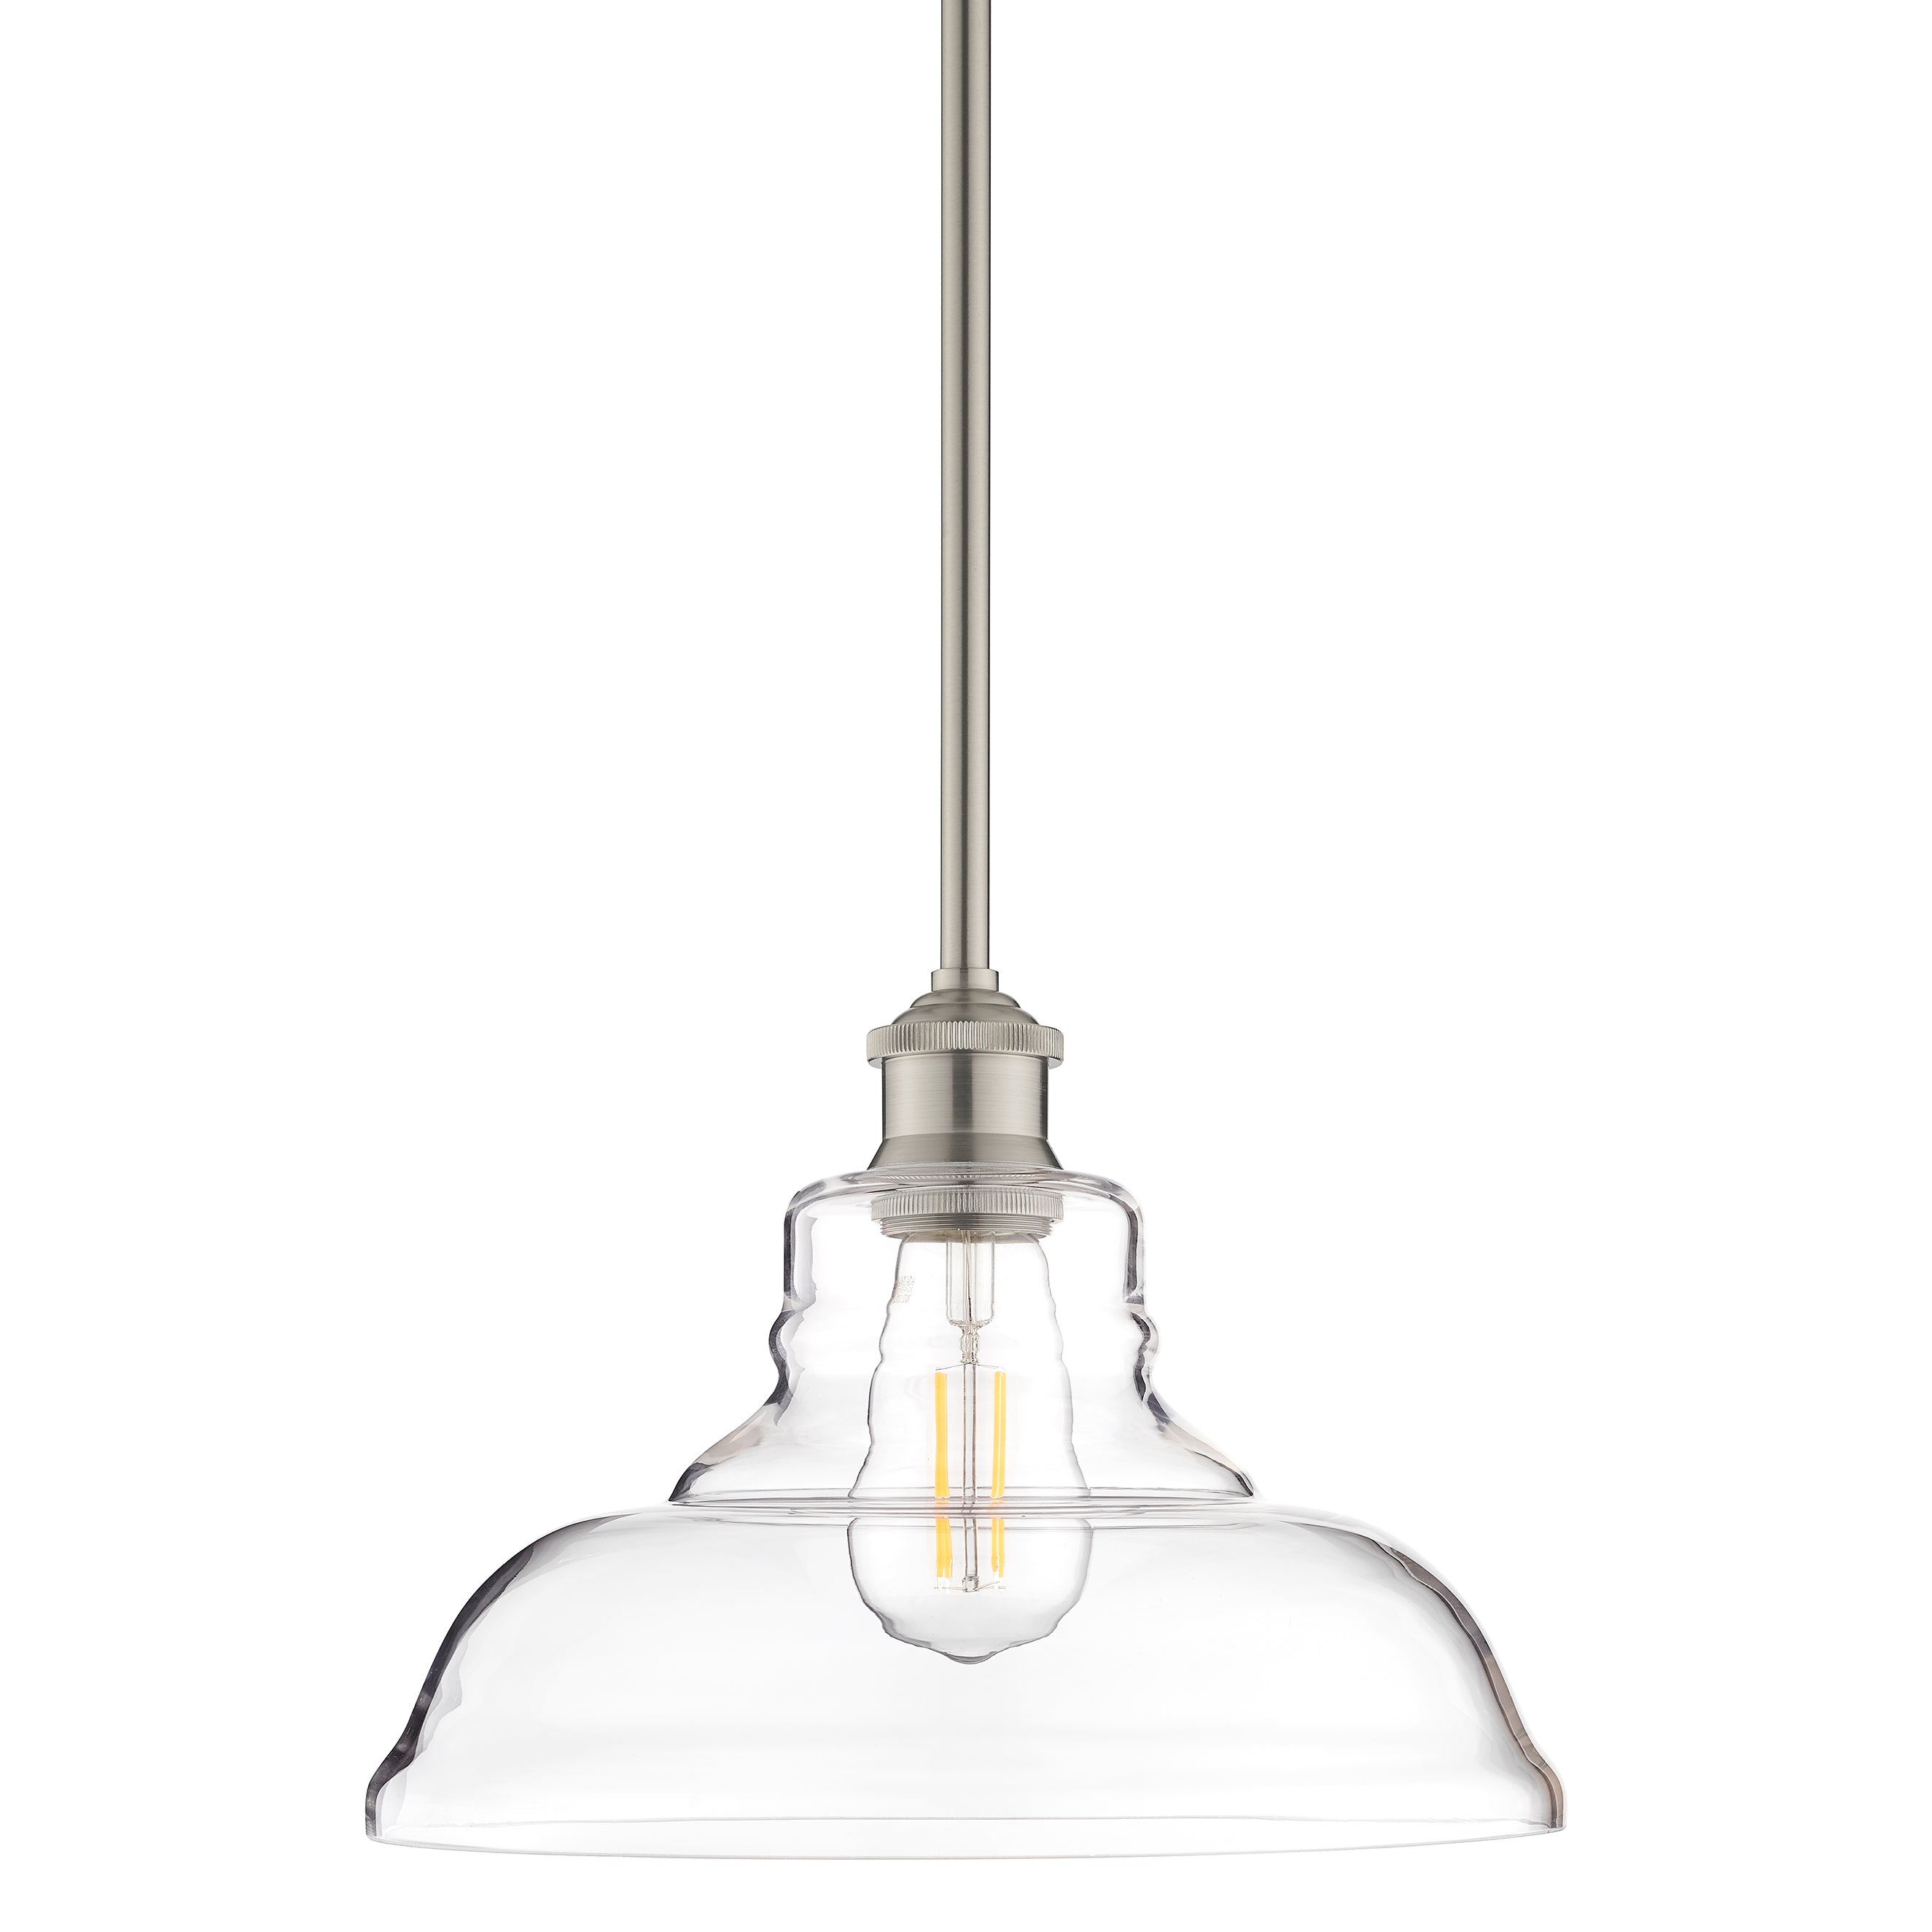 Lucera Industrial Stem Hung Pendant Light, LED bulb included